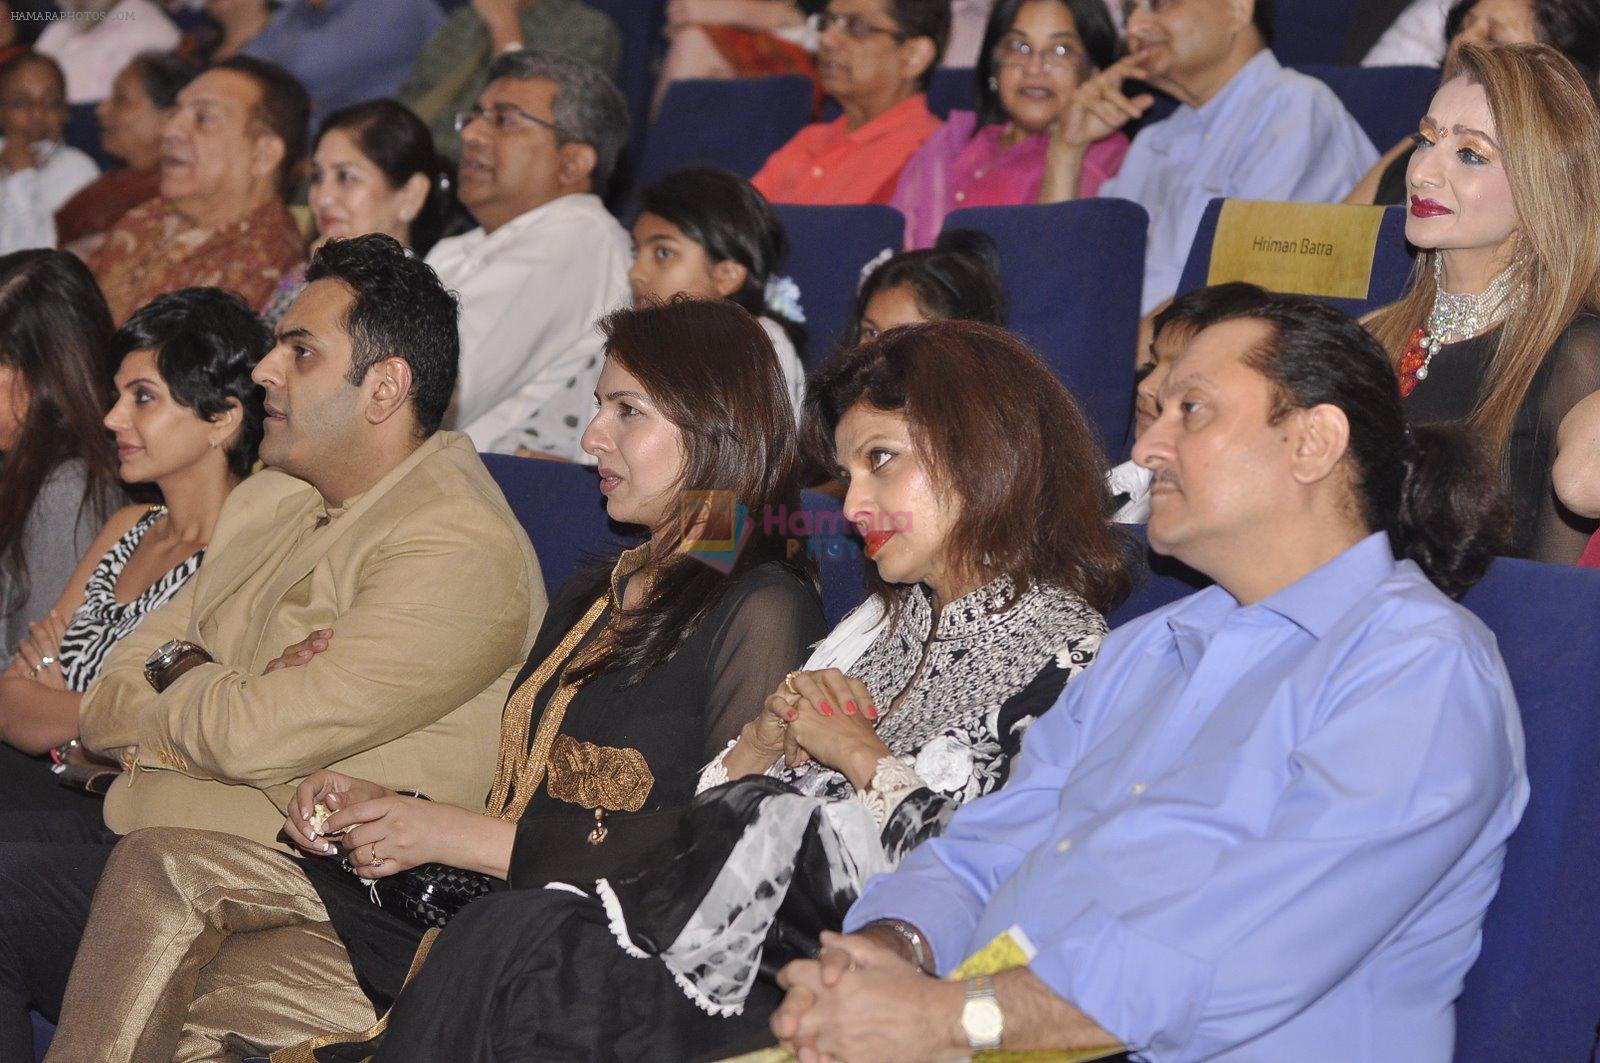 Mandira Bedi, Varsha Usgaonkar at Dr Batra's concert in NCPA, Mumbai on 16th Jan 2015